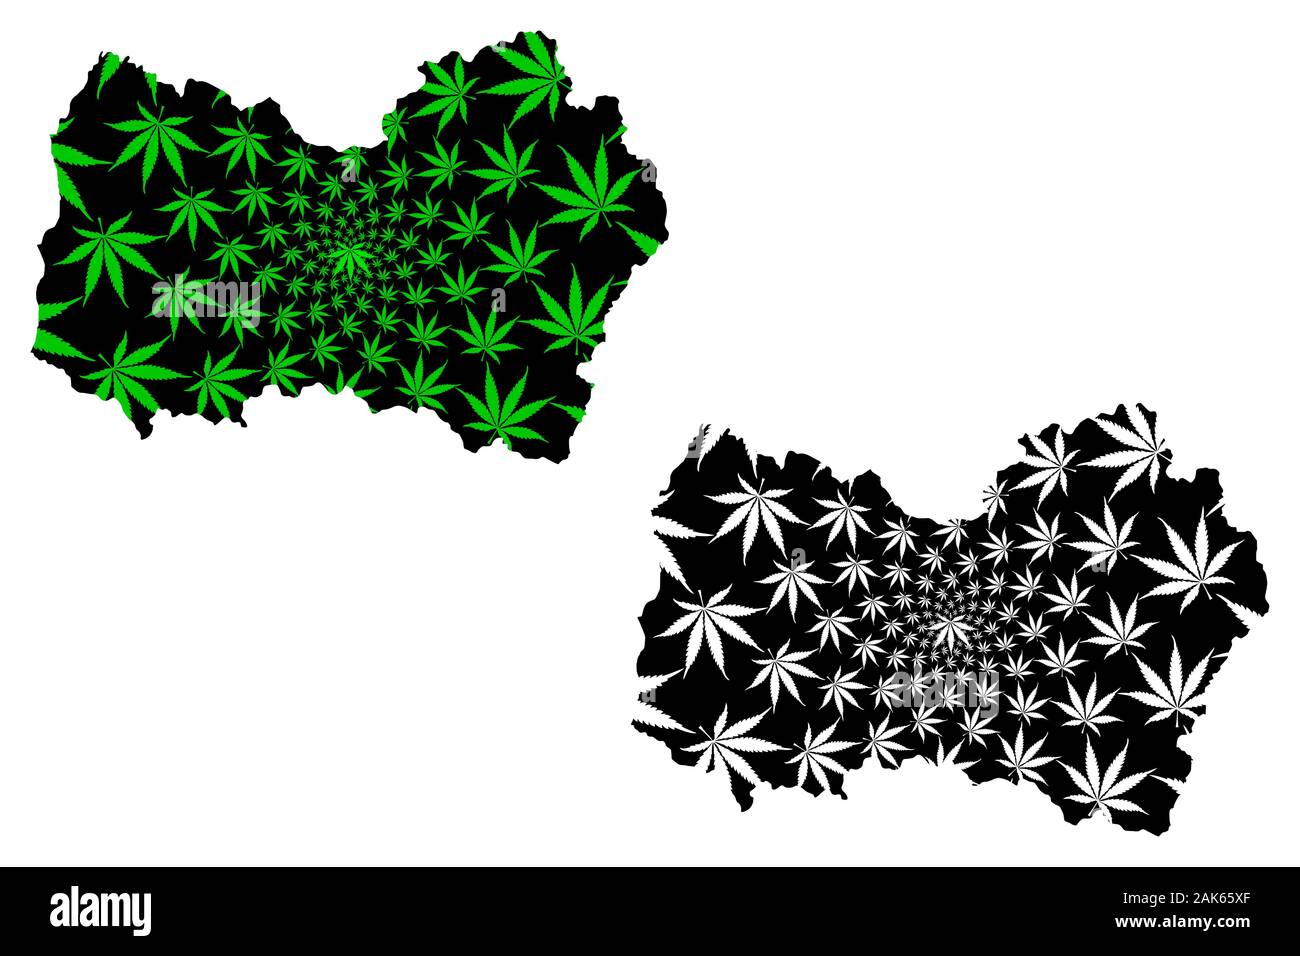 Libertador General Bernardo O Higgins Region (Republic of Chile) map is designed cannabis leaf green and black, Libertador General Bernardo O'Higgins Stock Vector